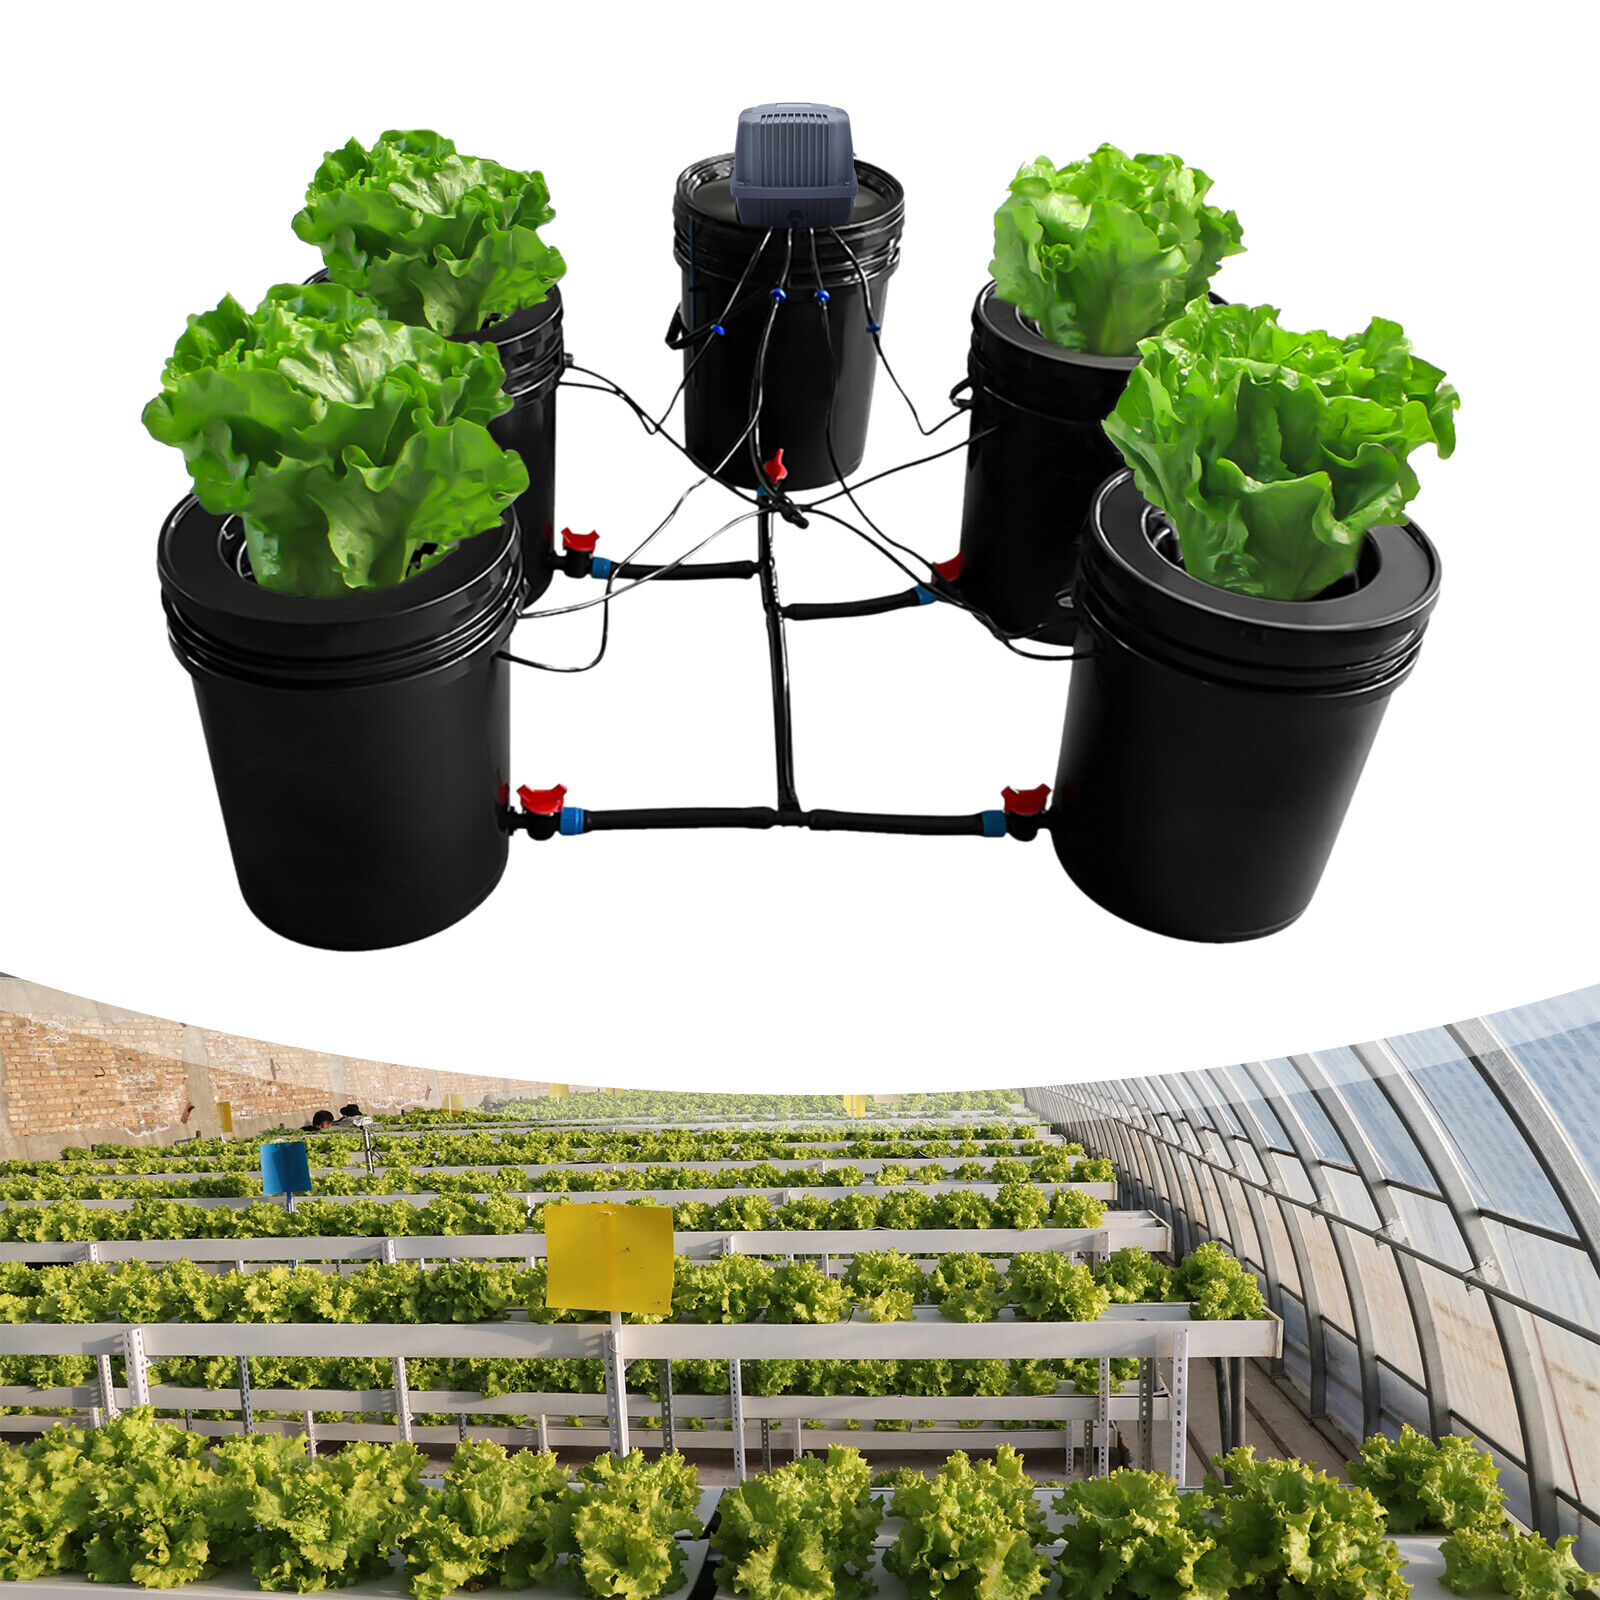 5x Planting Buckets Hydroponics Grow System Recirculating Deep Water Culture Kit